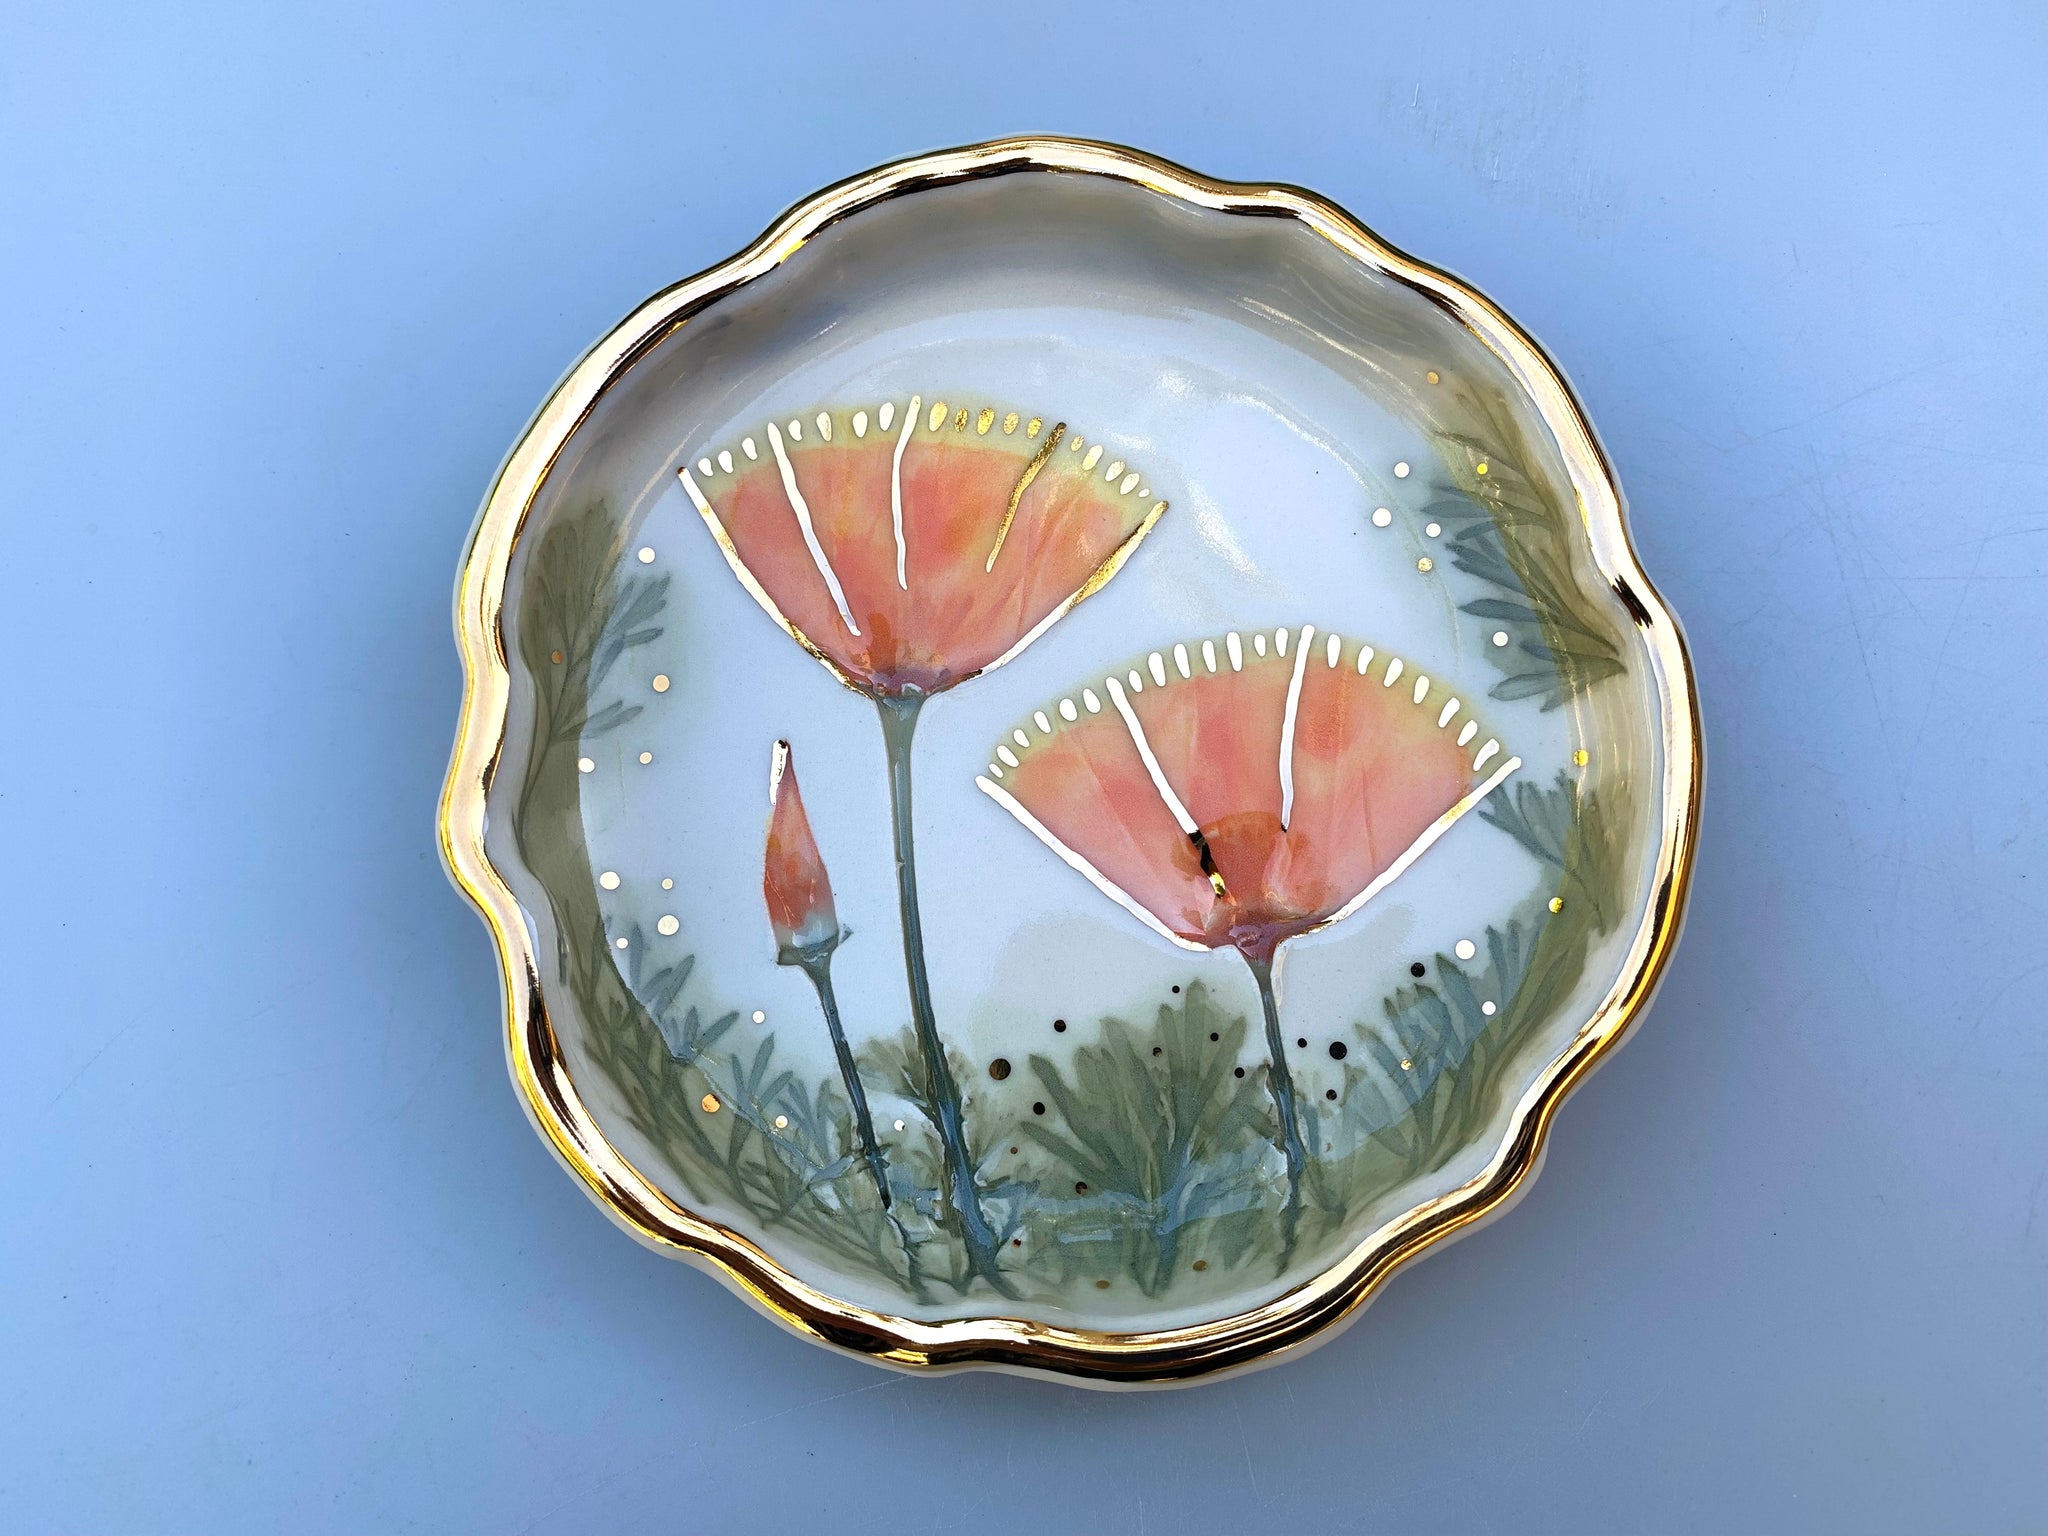 California Poppy Jewelry Holder, Ceramic Dish with Flower Imprint